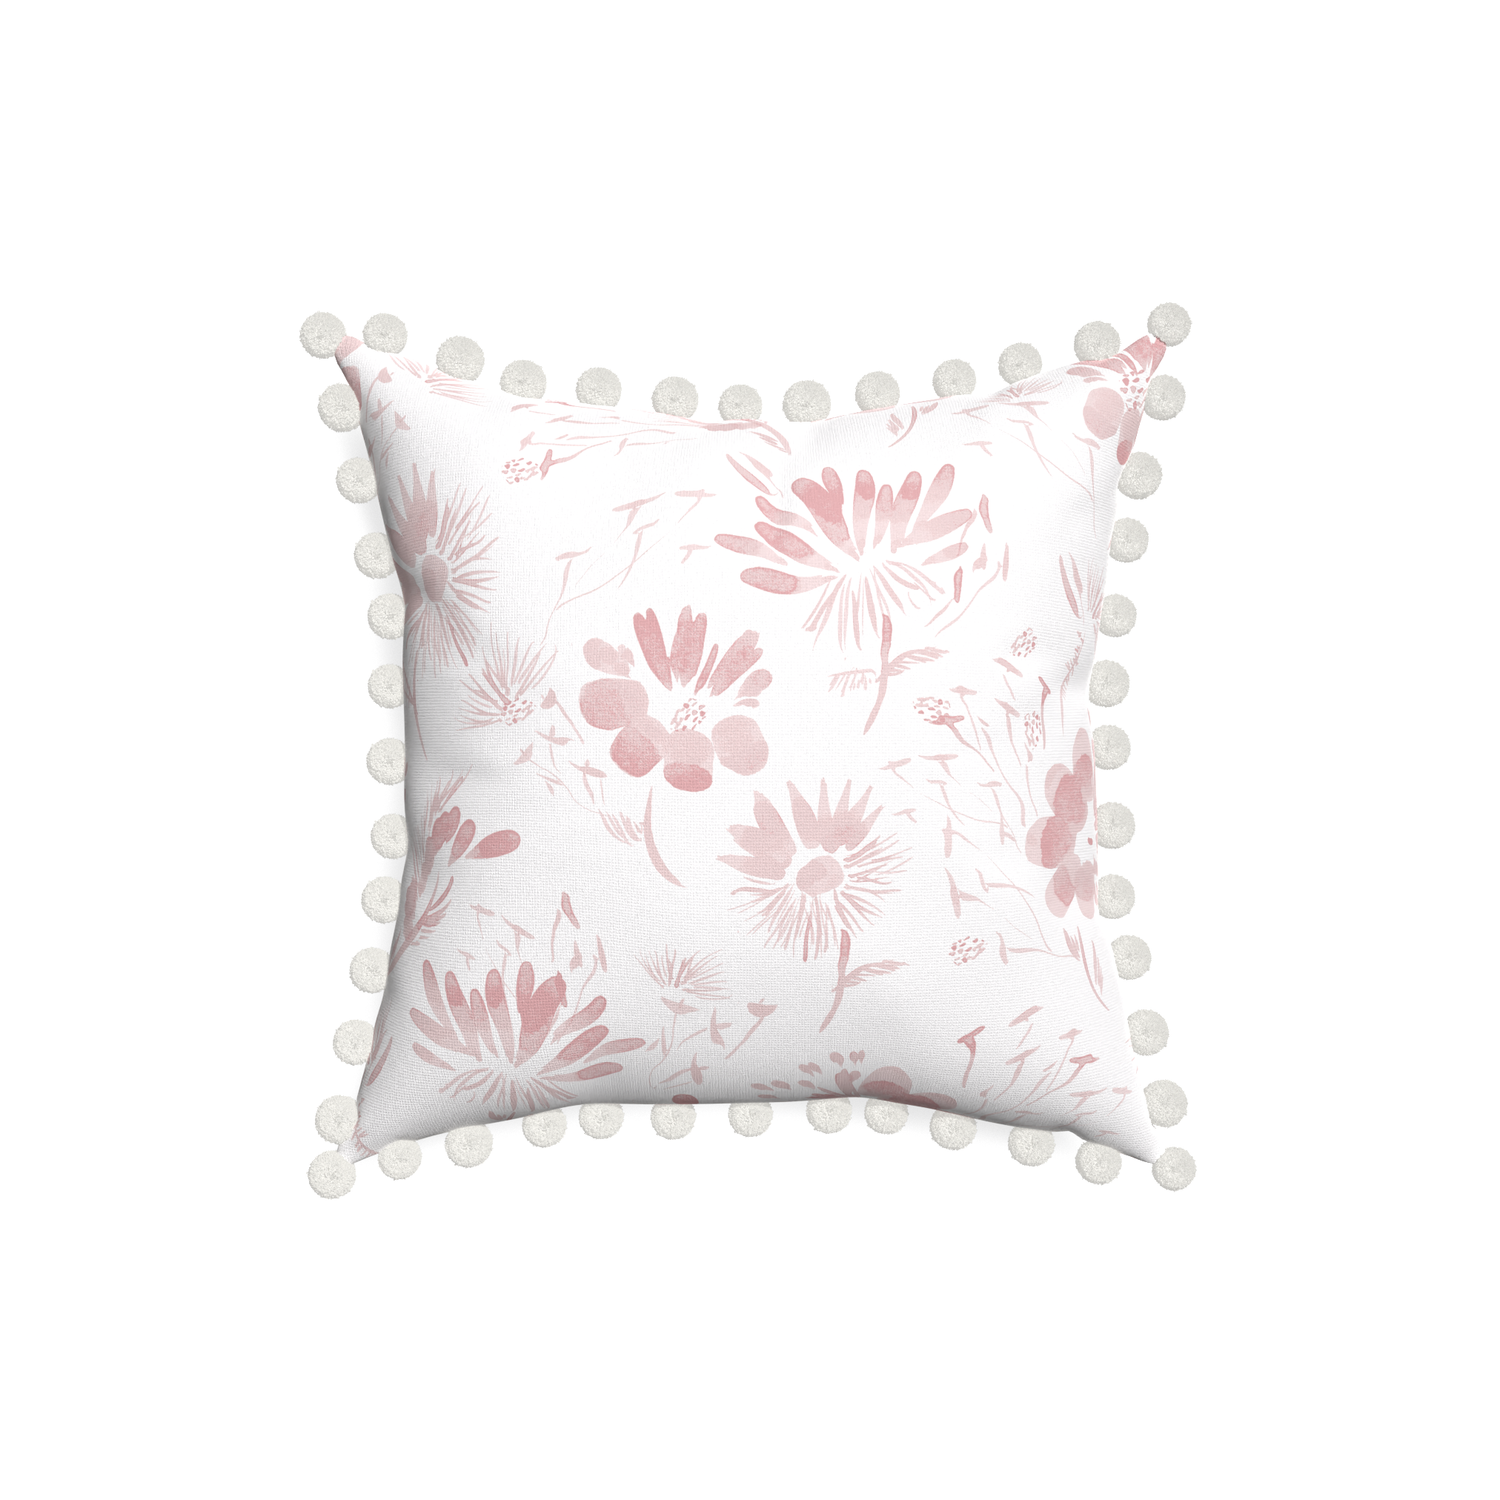 18-square blake custom pink floralpillow with snow pom pom on white background